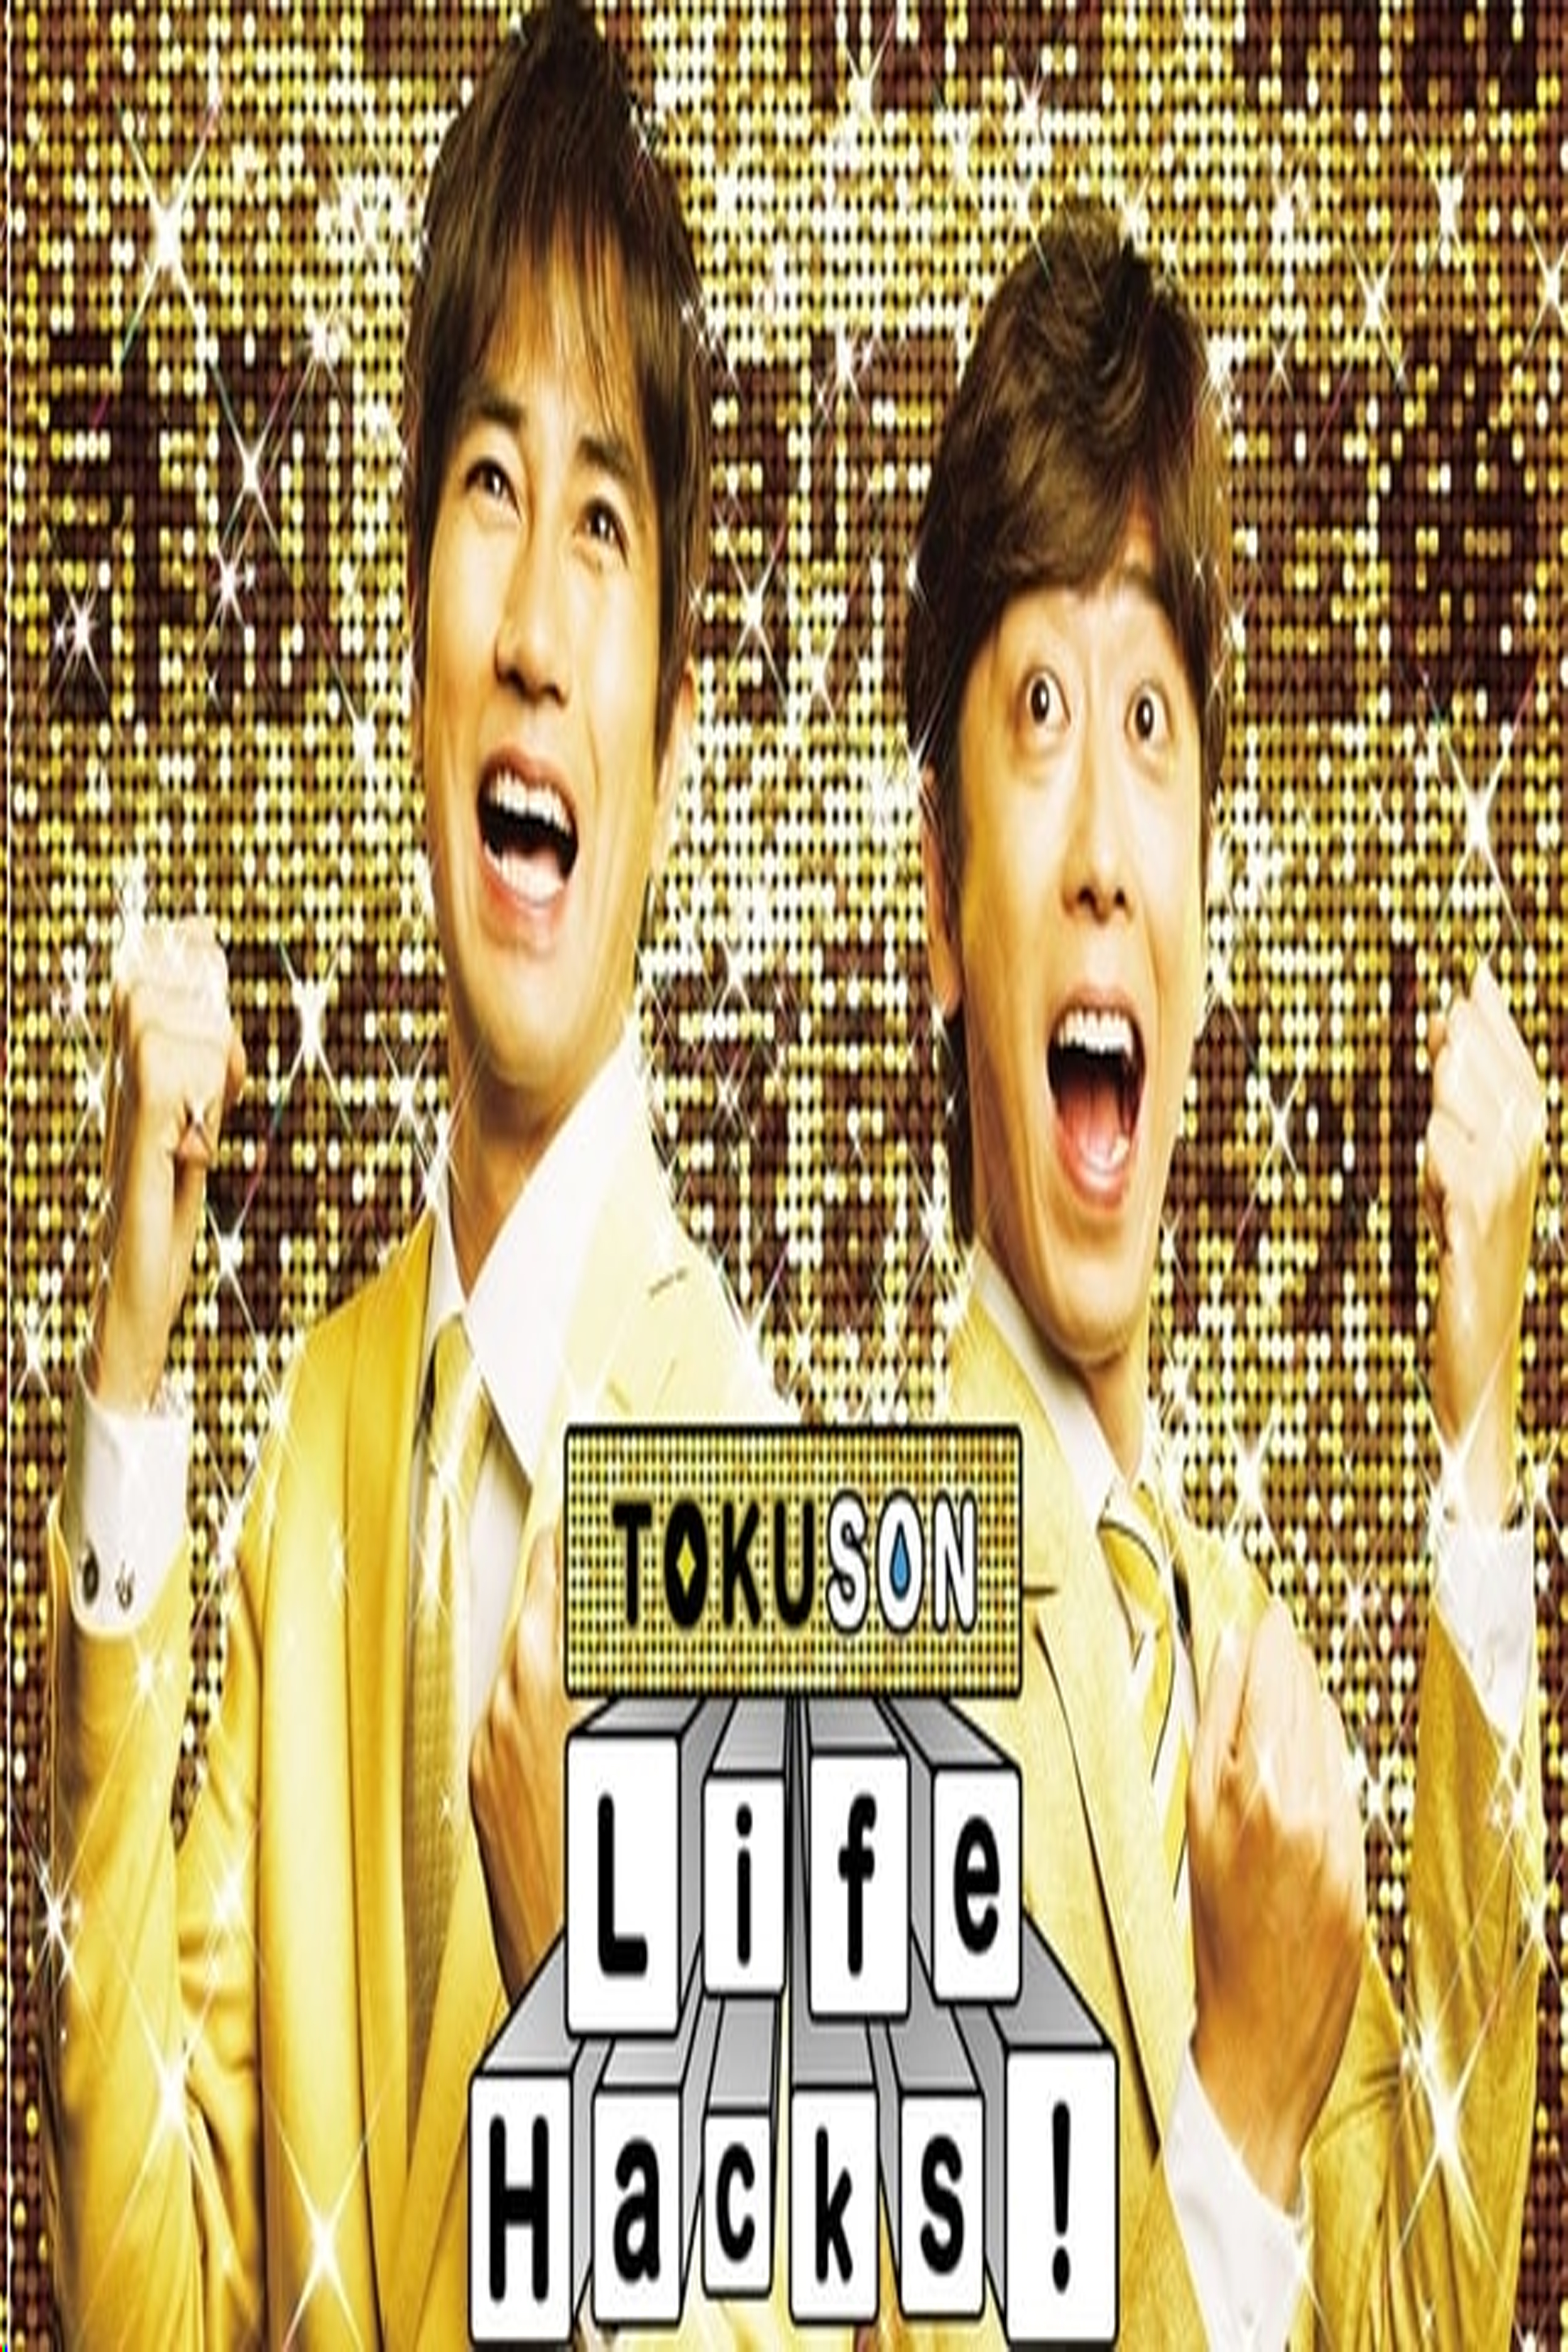 TOKUSON: Life Hacks! – 生活小貼士 – Episode 20